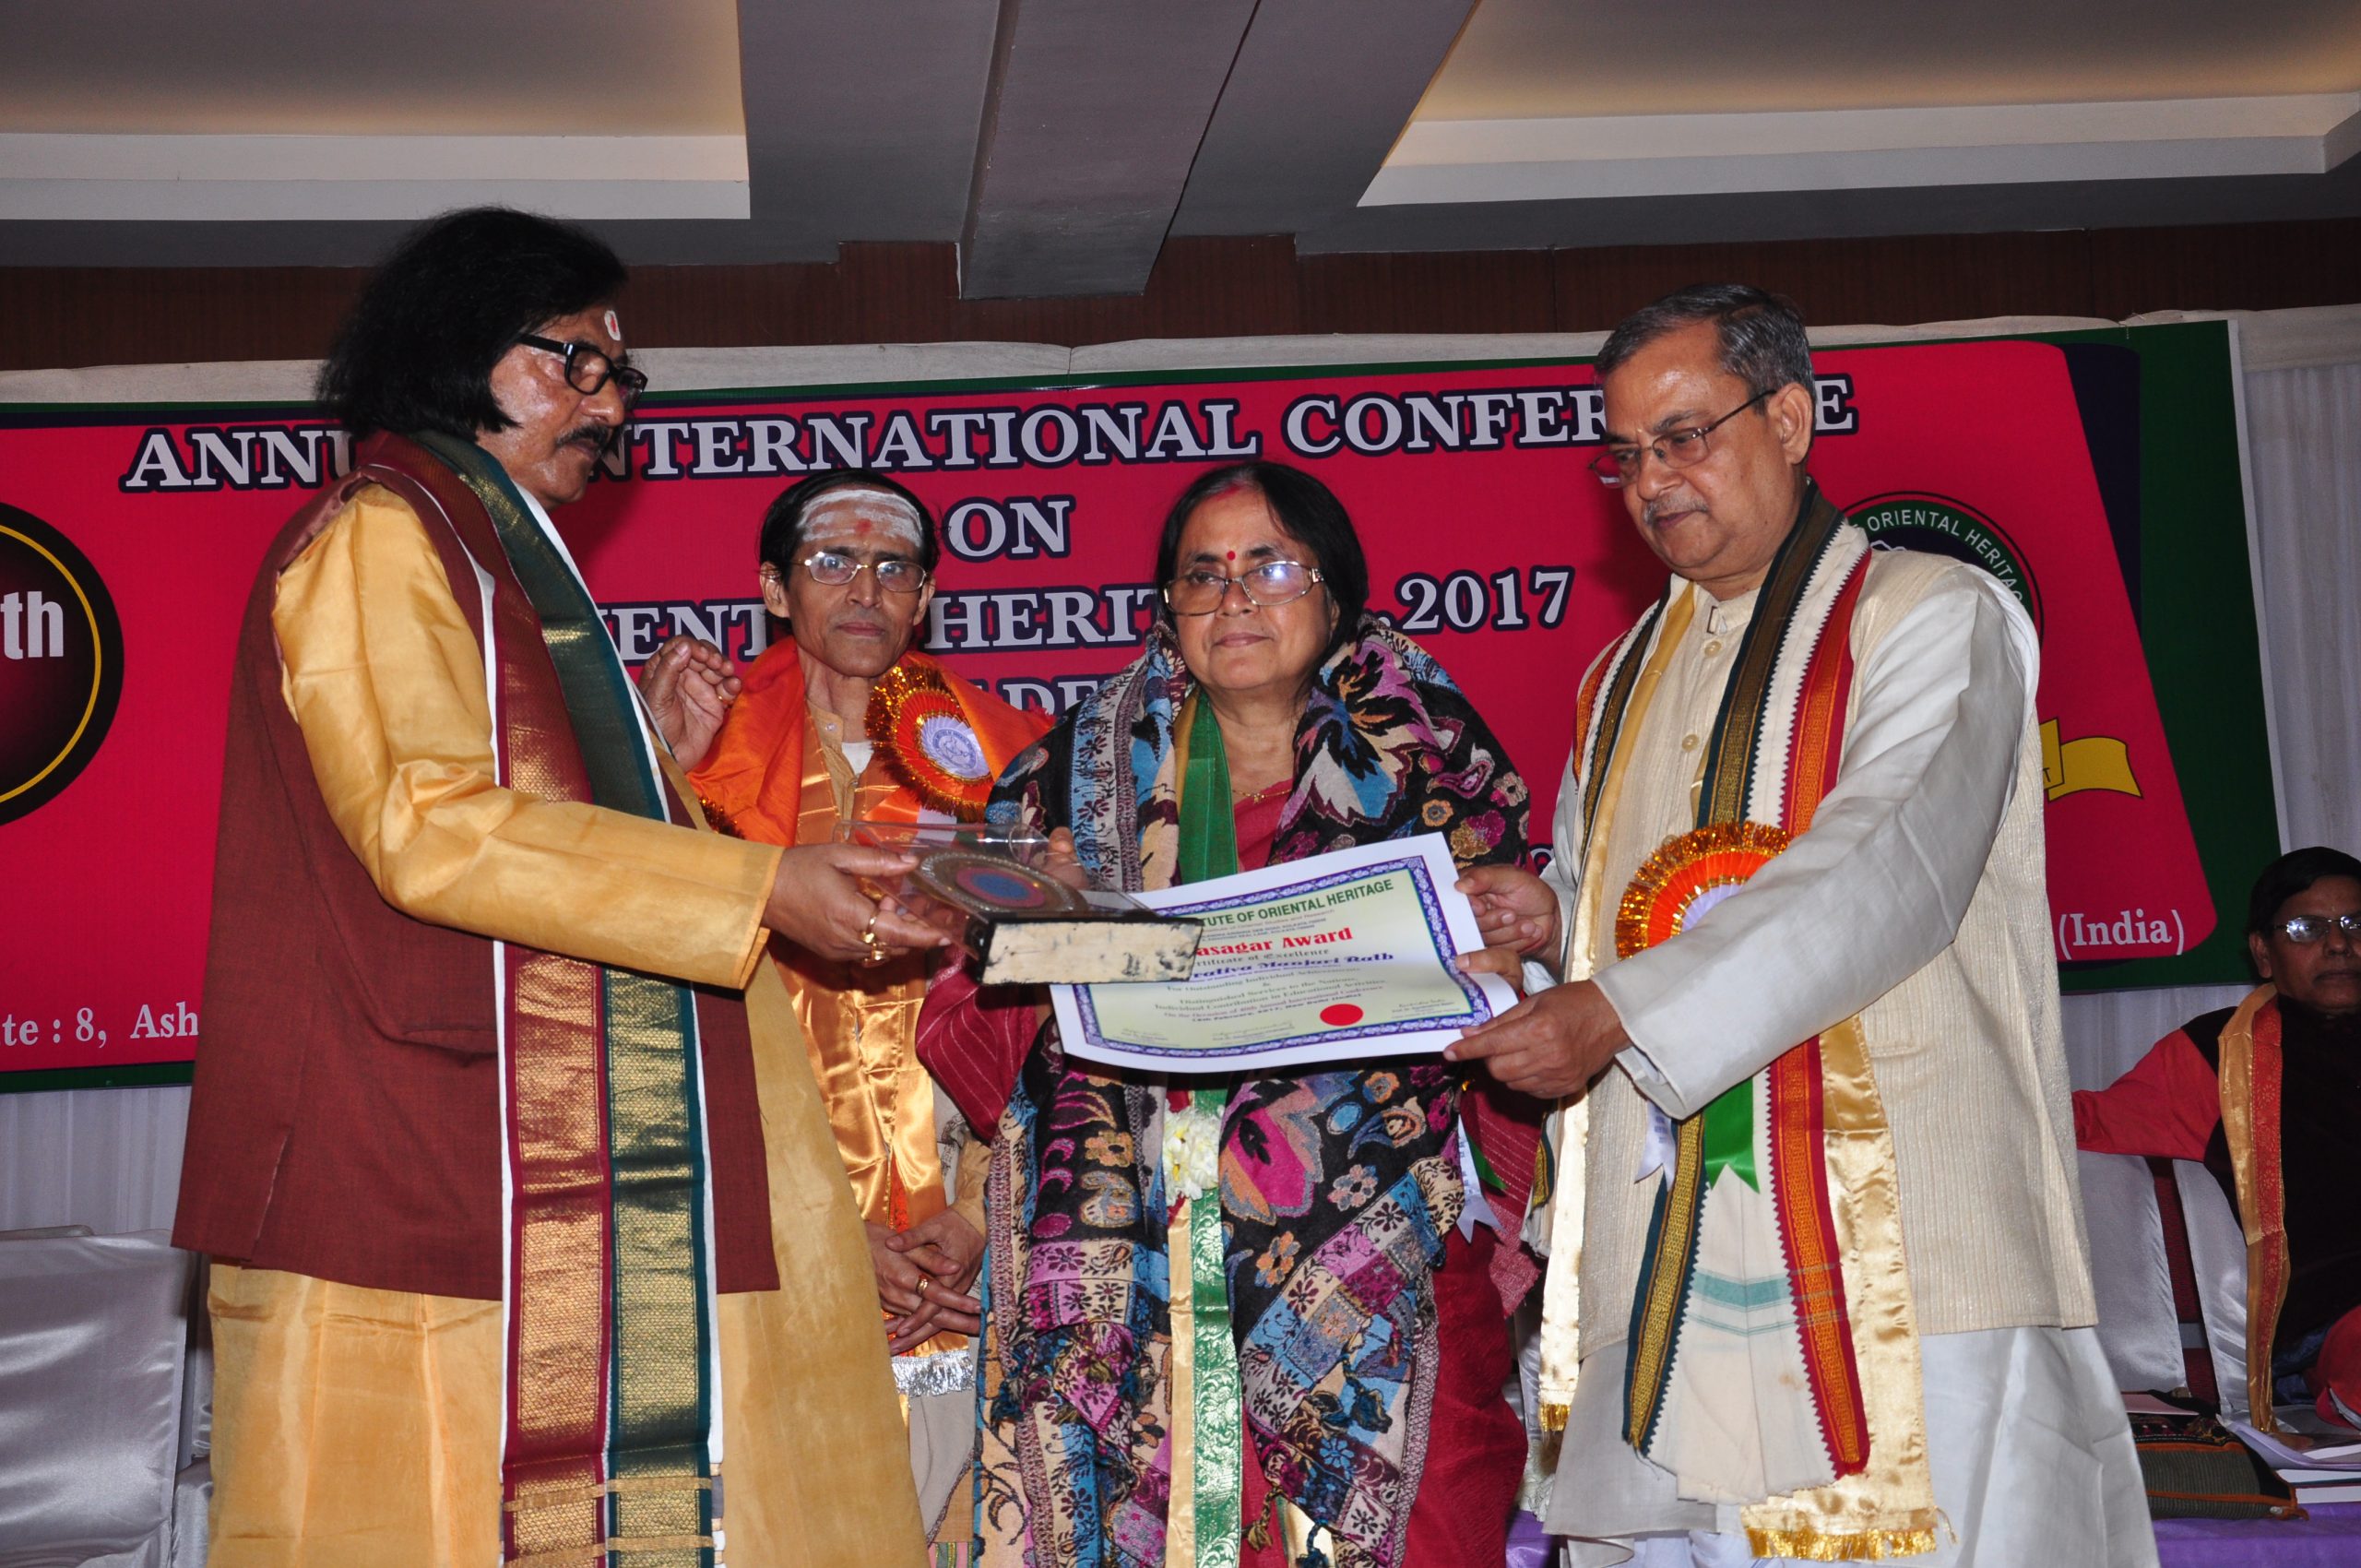 Award Recieved-Prof. P.M. Rath